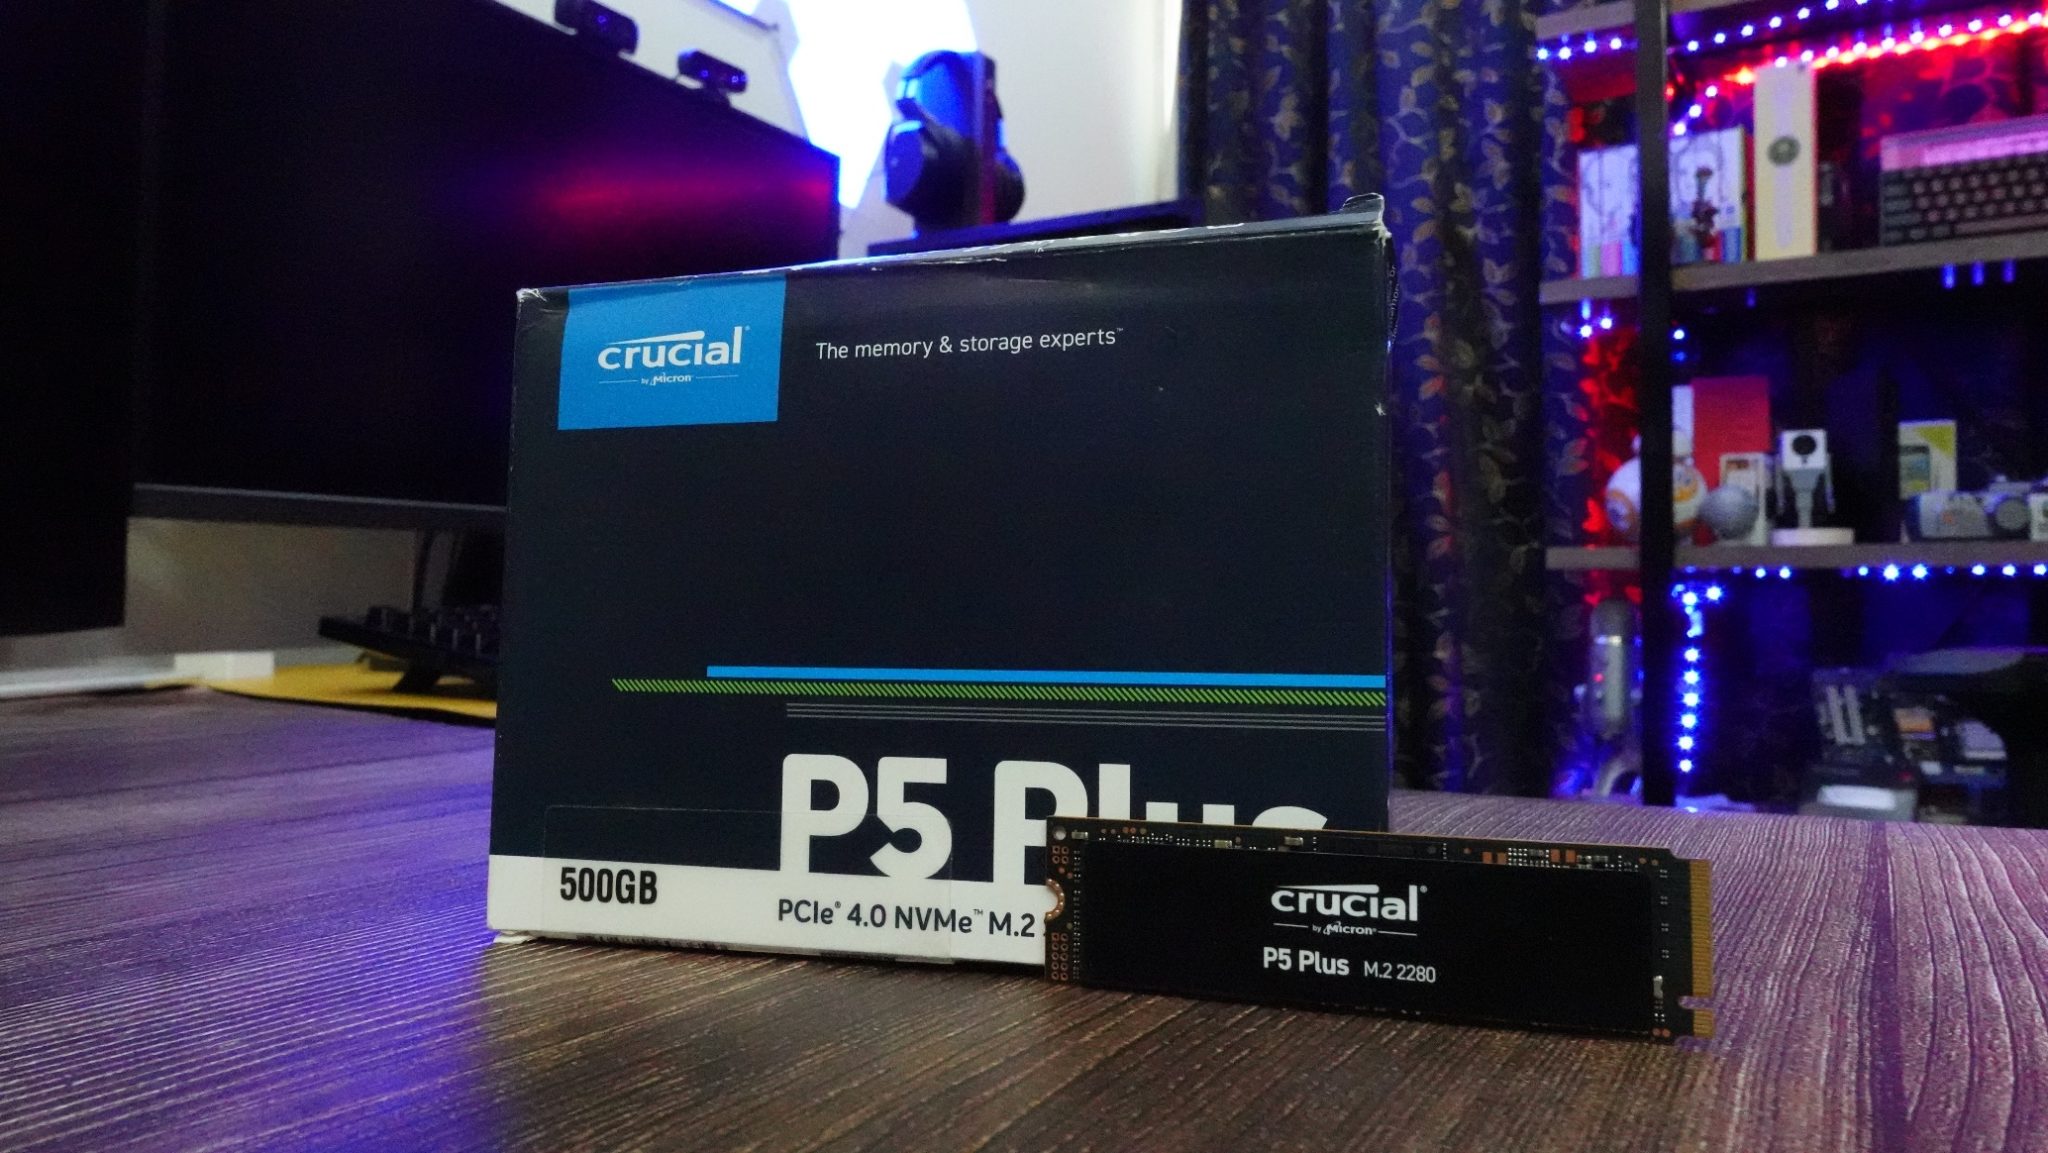 Crucial P5 Plus 2TB SSD 3D NAND M.2 NVMe PCIe 4.0 x4 Interface